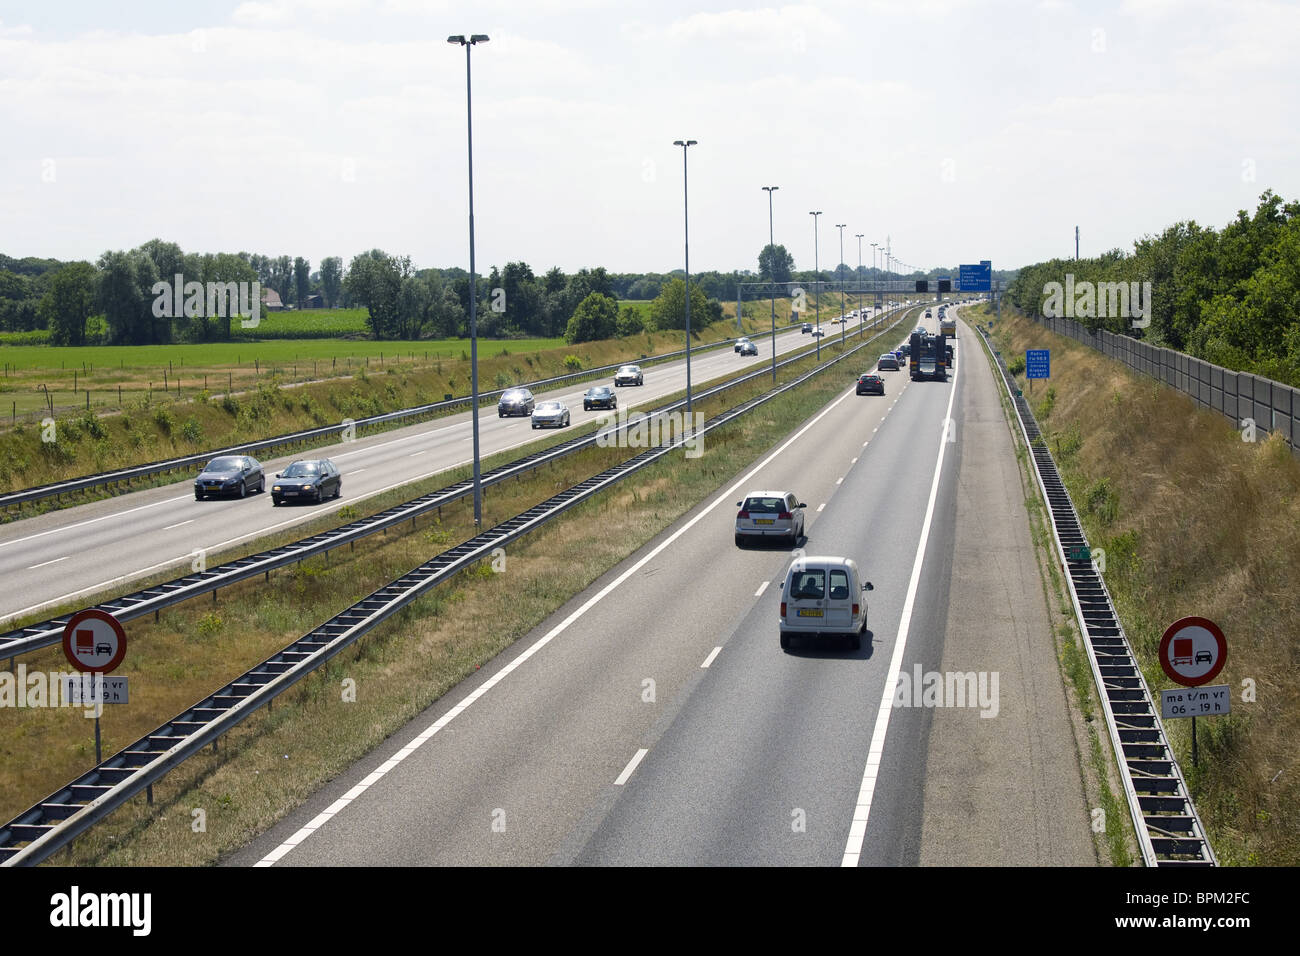 A1 motorway connecting Breda in The Netherlands with Antwerp in Belgium. Stock Photo